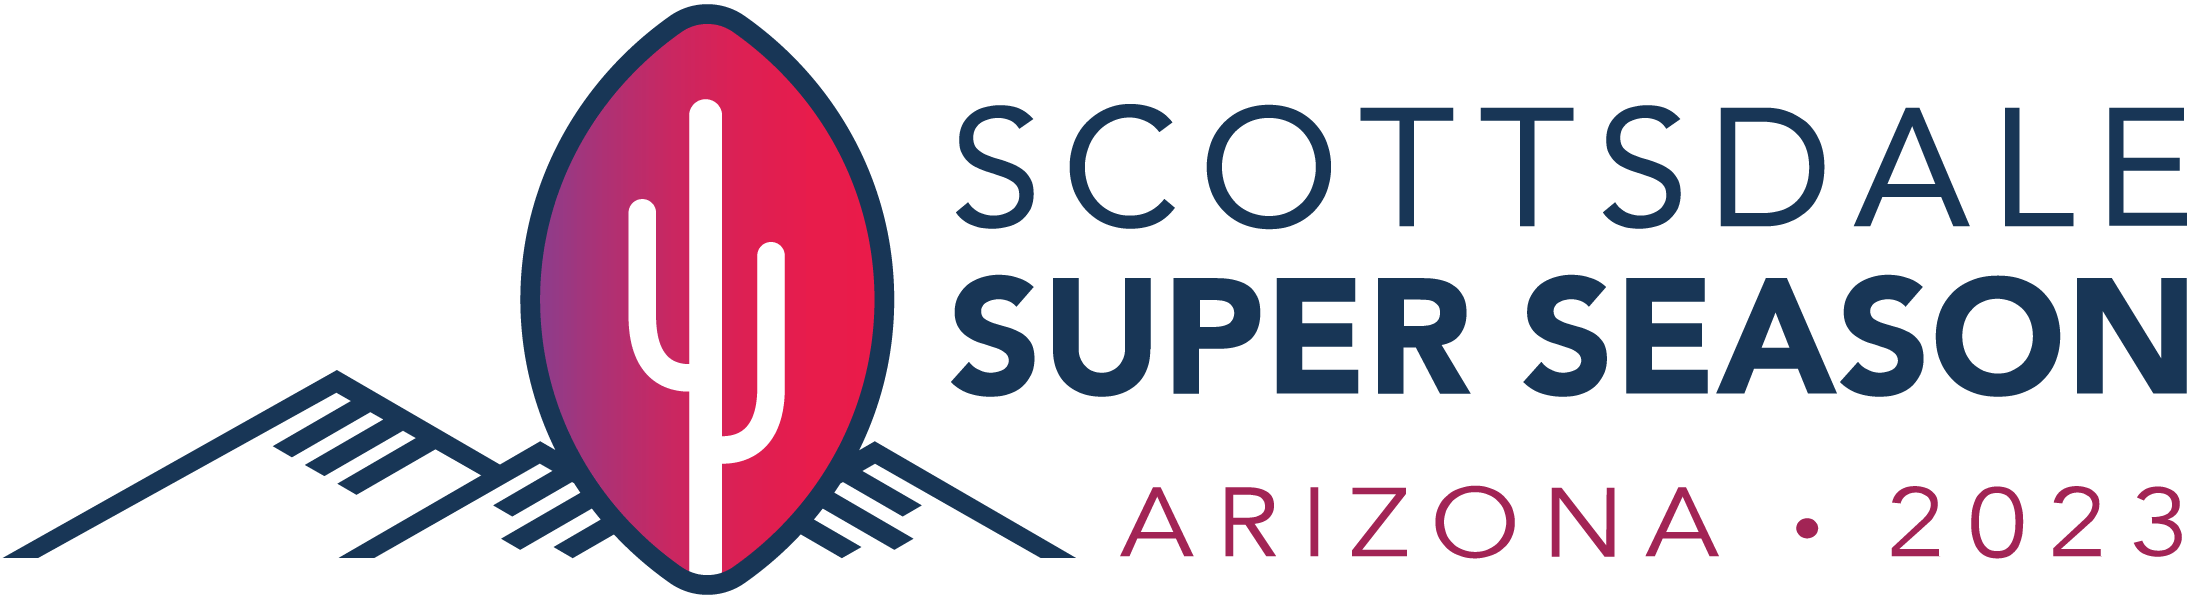 2023 Scottsdale Super season logo